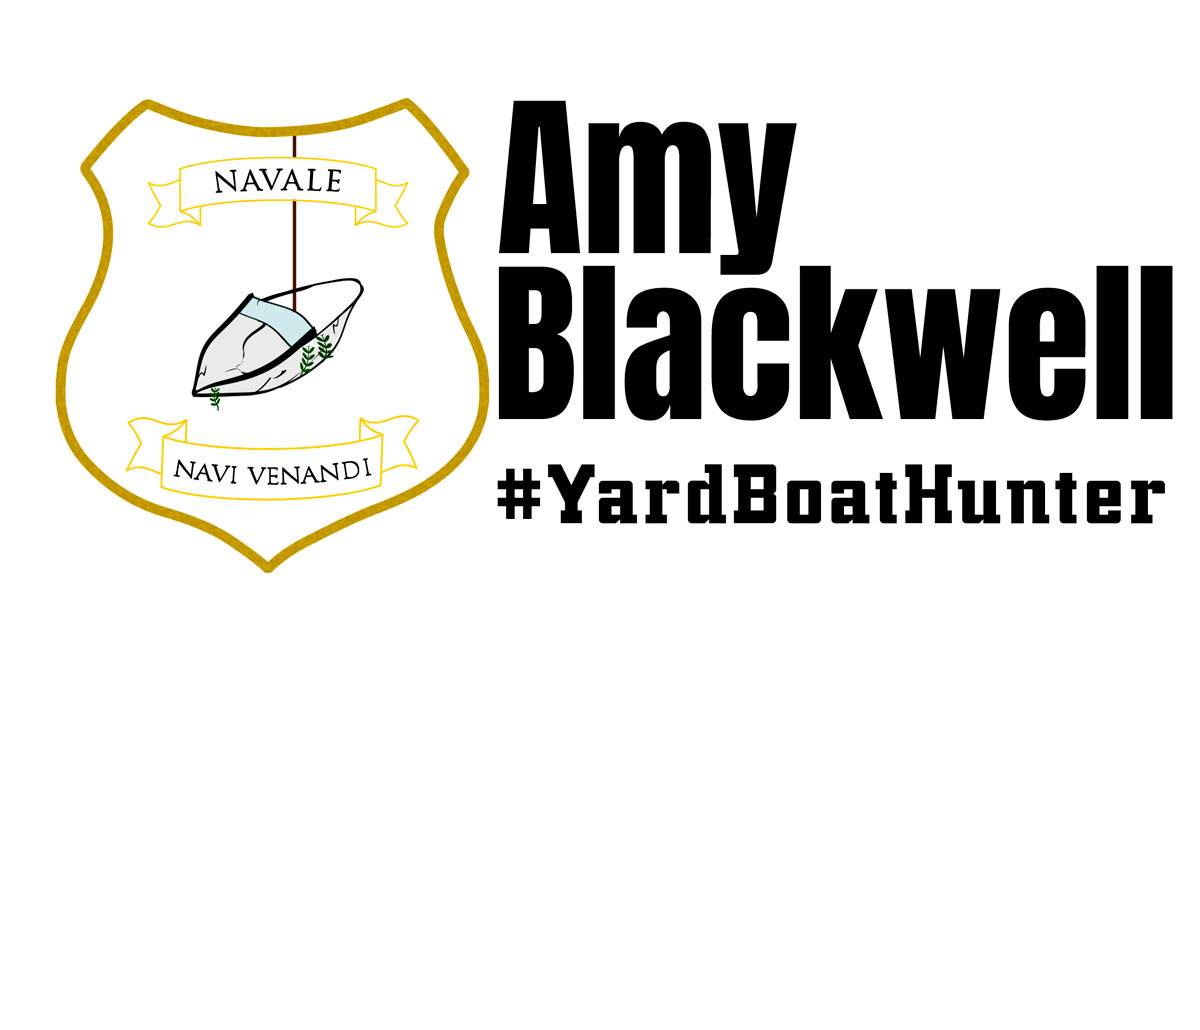 Amy Blackwell - Yardboat Hunter